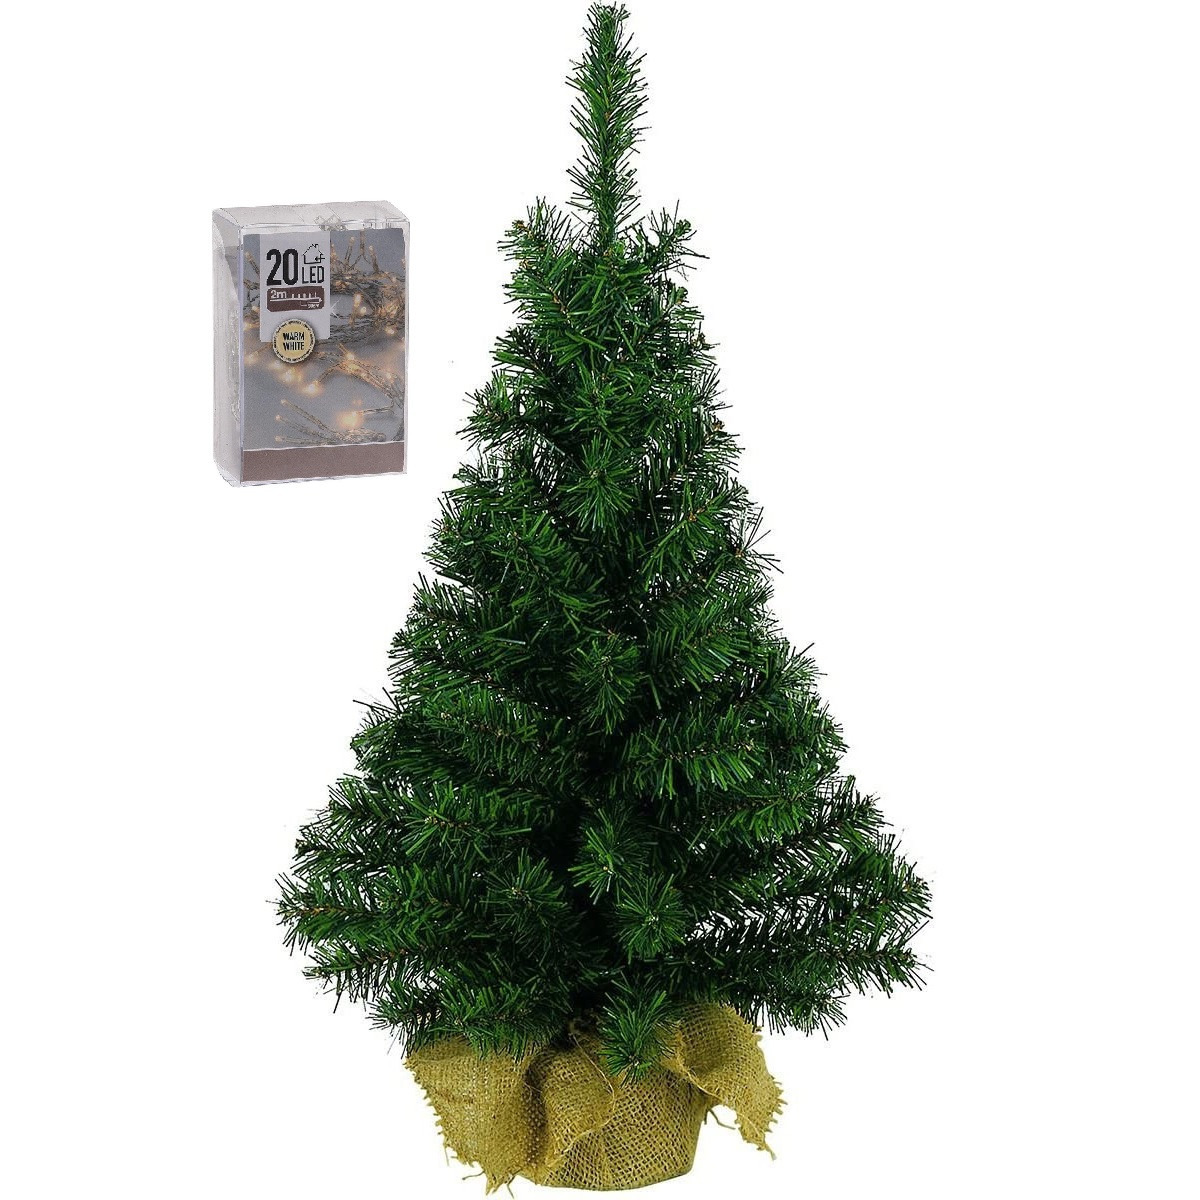 Volle kunst kerstboom 45 cm in jute zak inclusief 20 warm witte lampjes